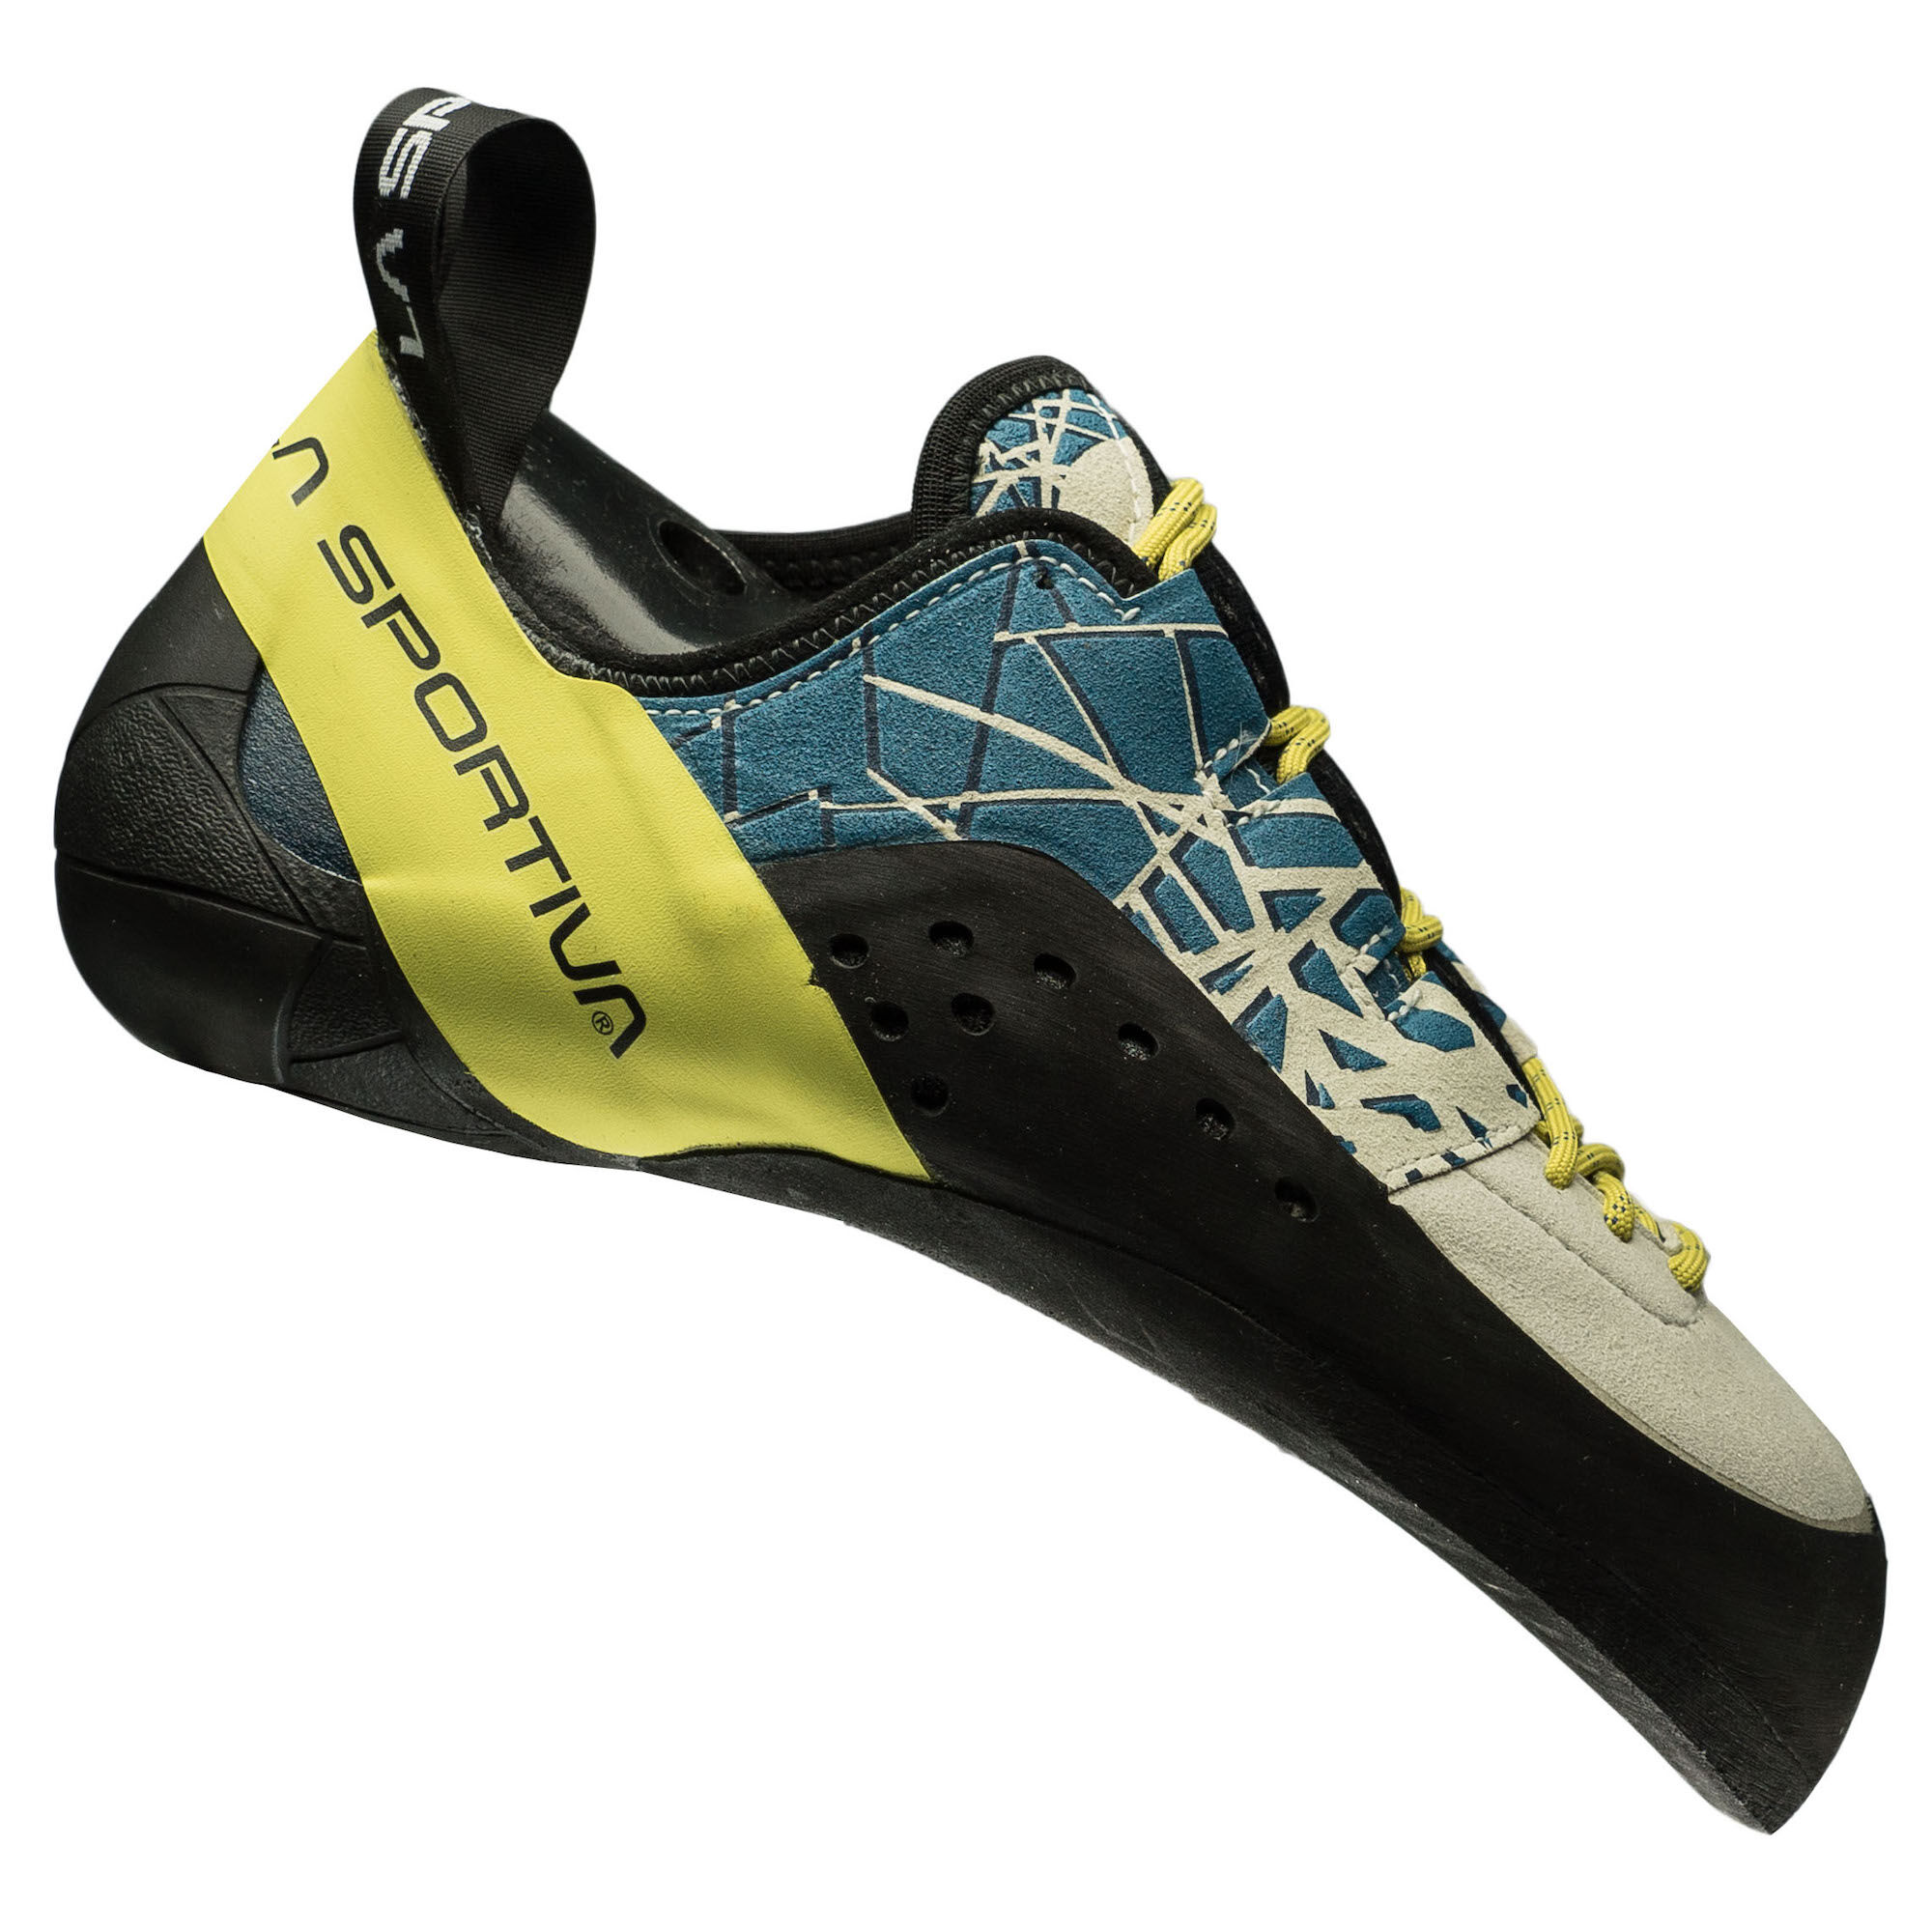 La Sportiva - Kataki - Climbing shoes - Men's